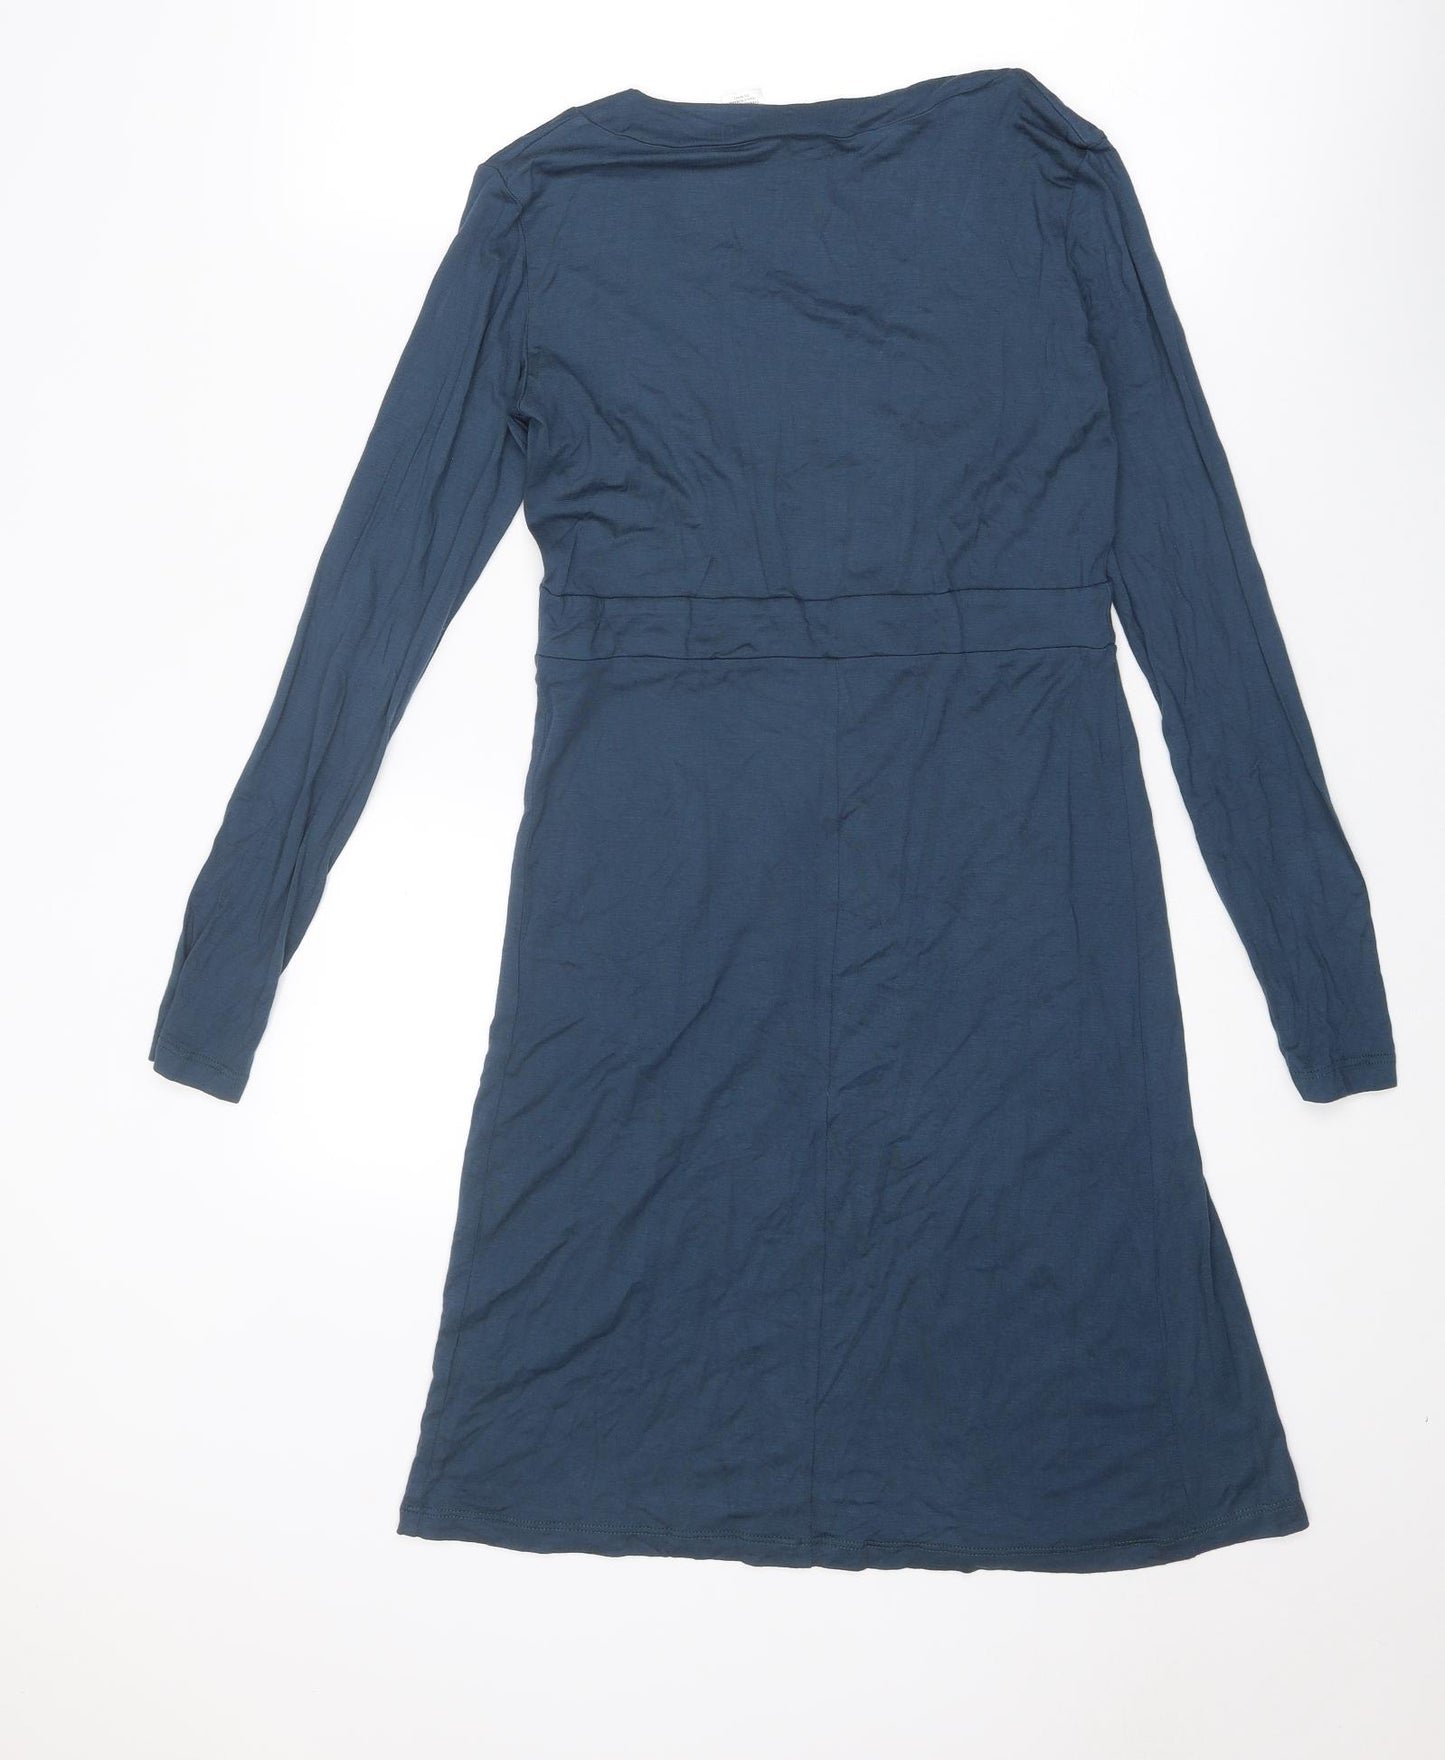 La Redoute Womens Black Viscose Jumper Dress Size 8 V-Neck Pullover - Size 8-10